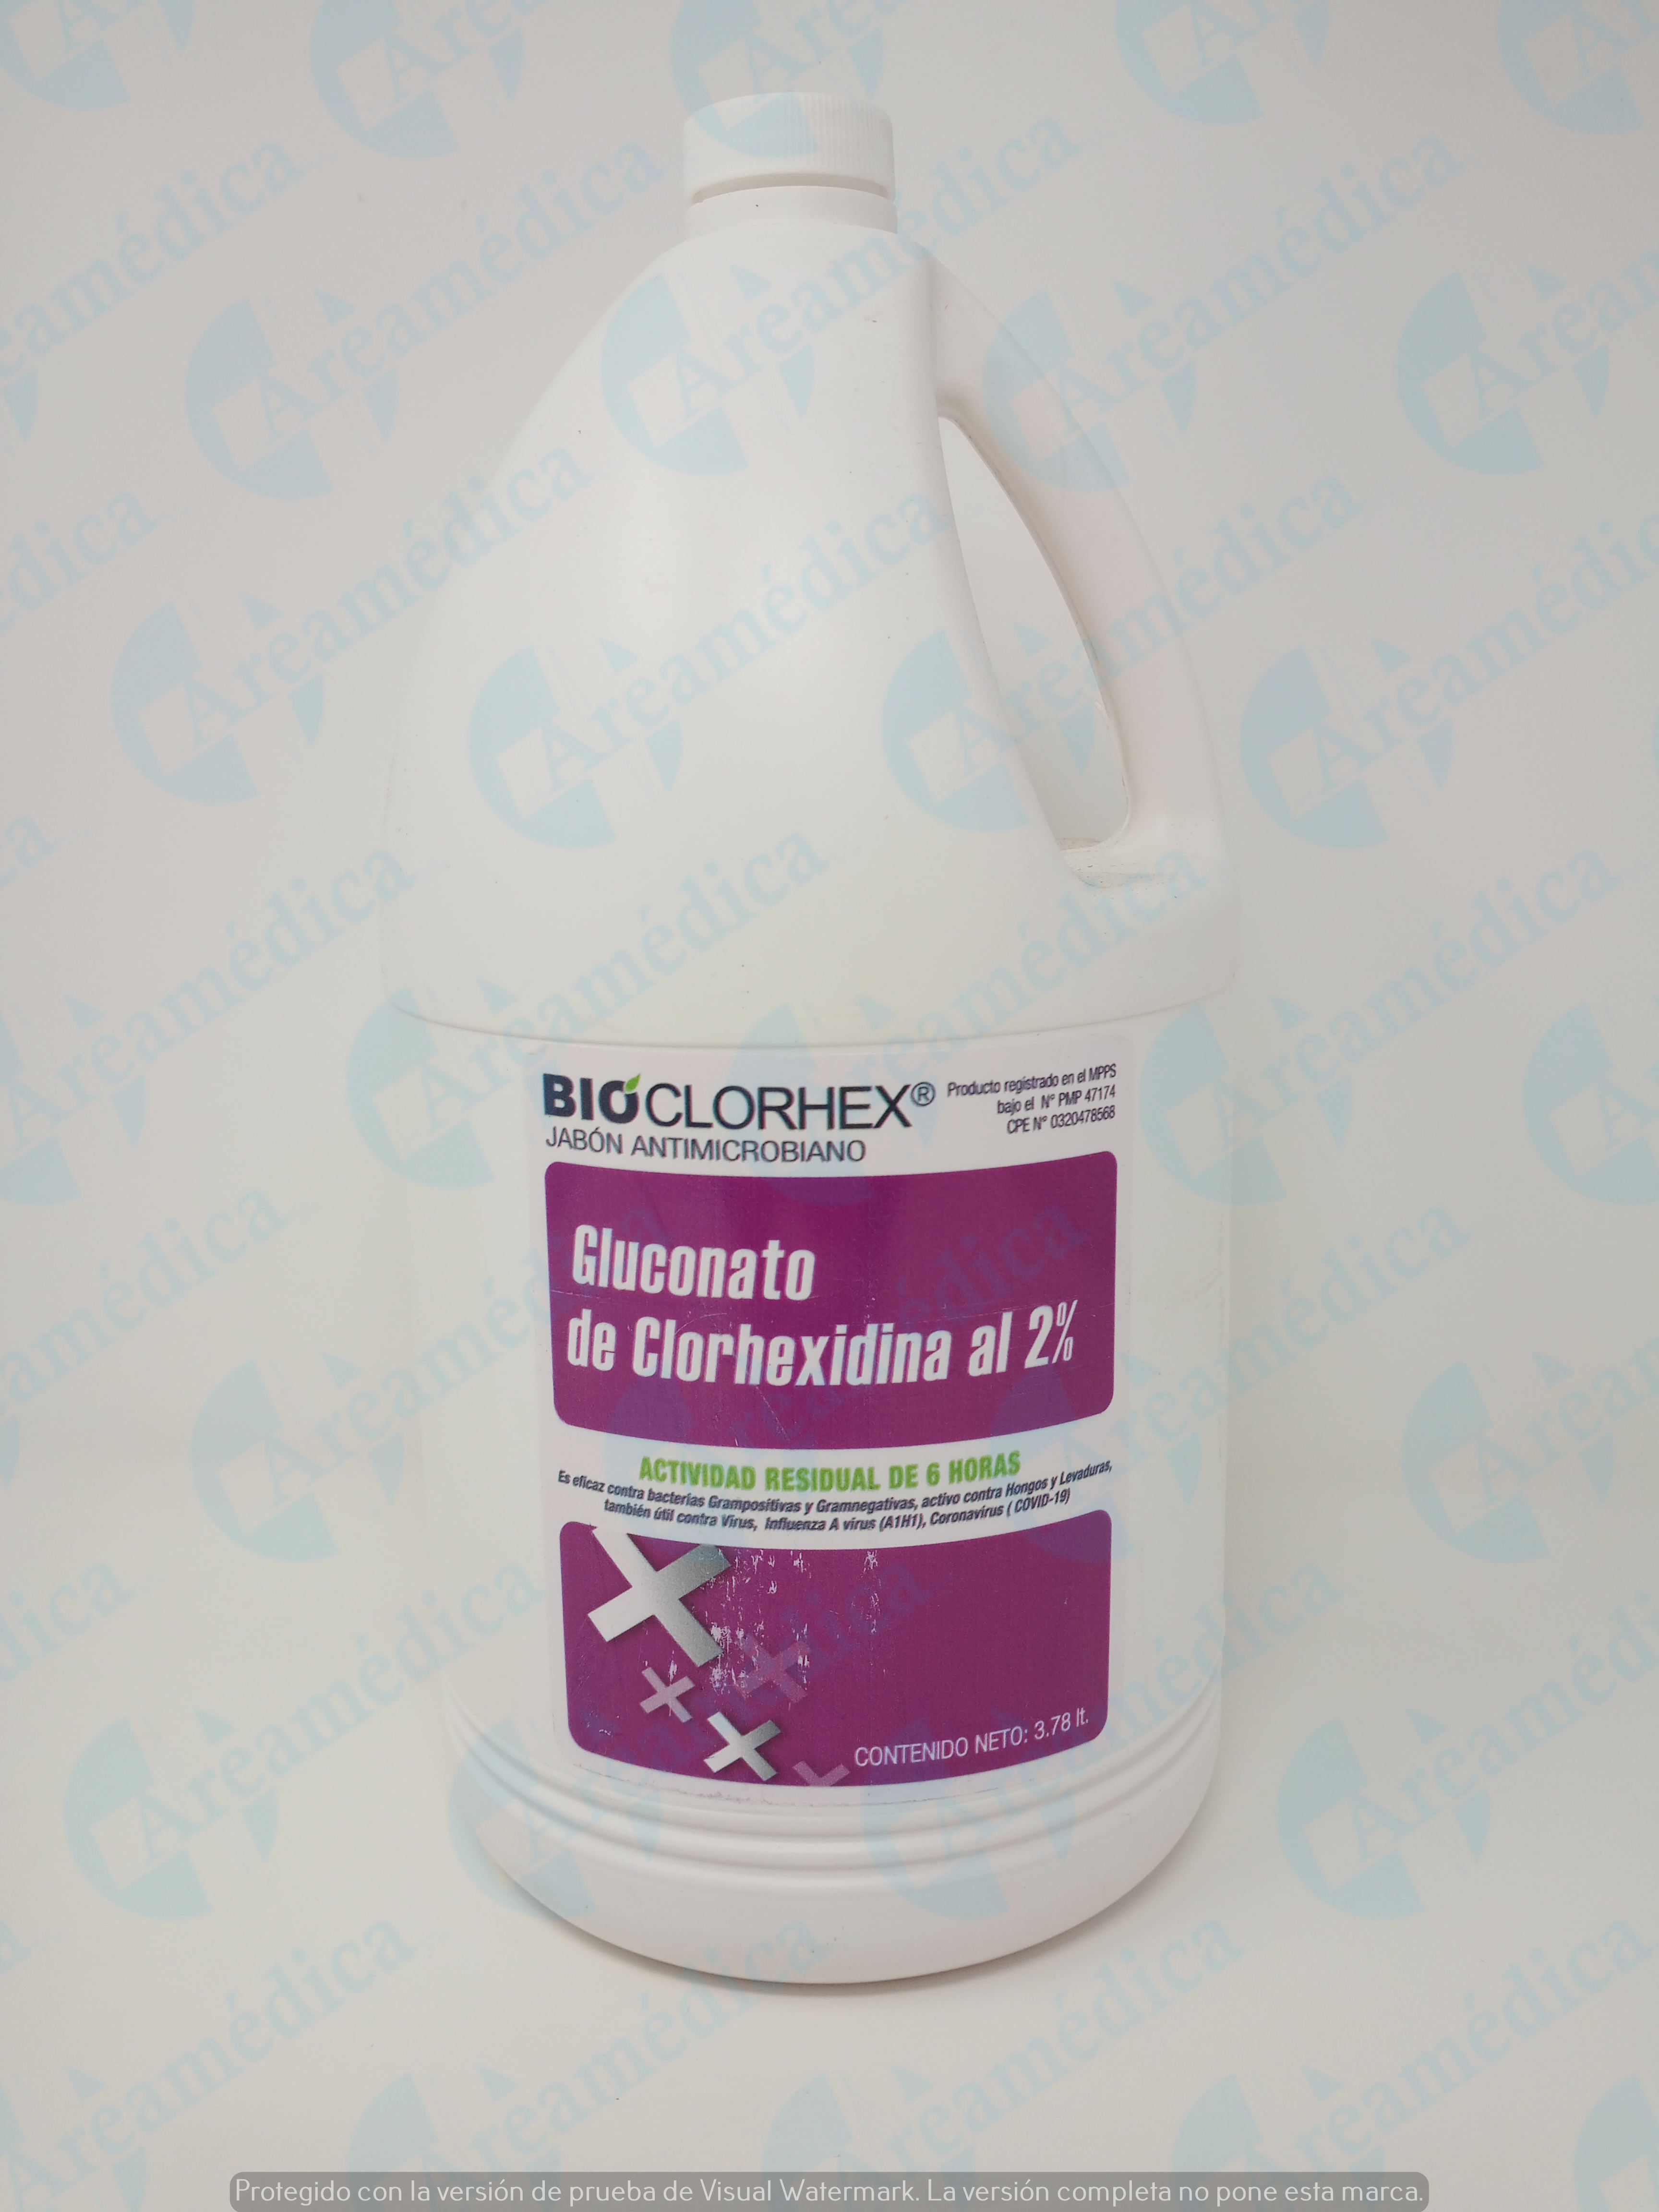 Bioclorhex jabonoso gluconato de clorhexidina al 2%